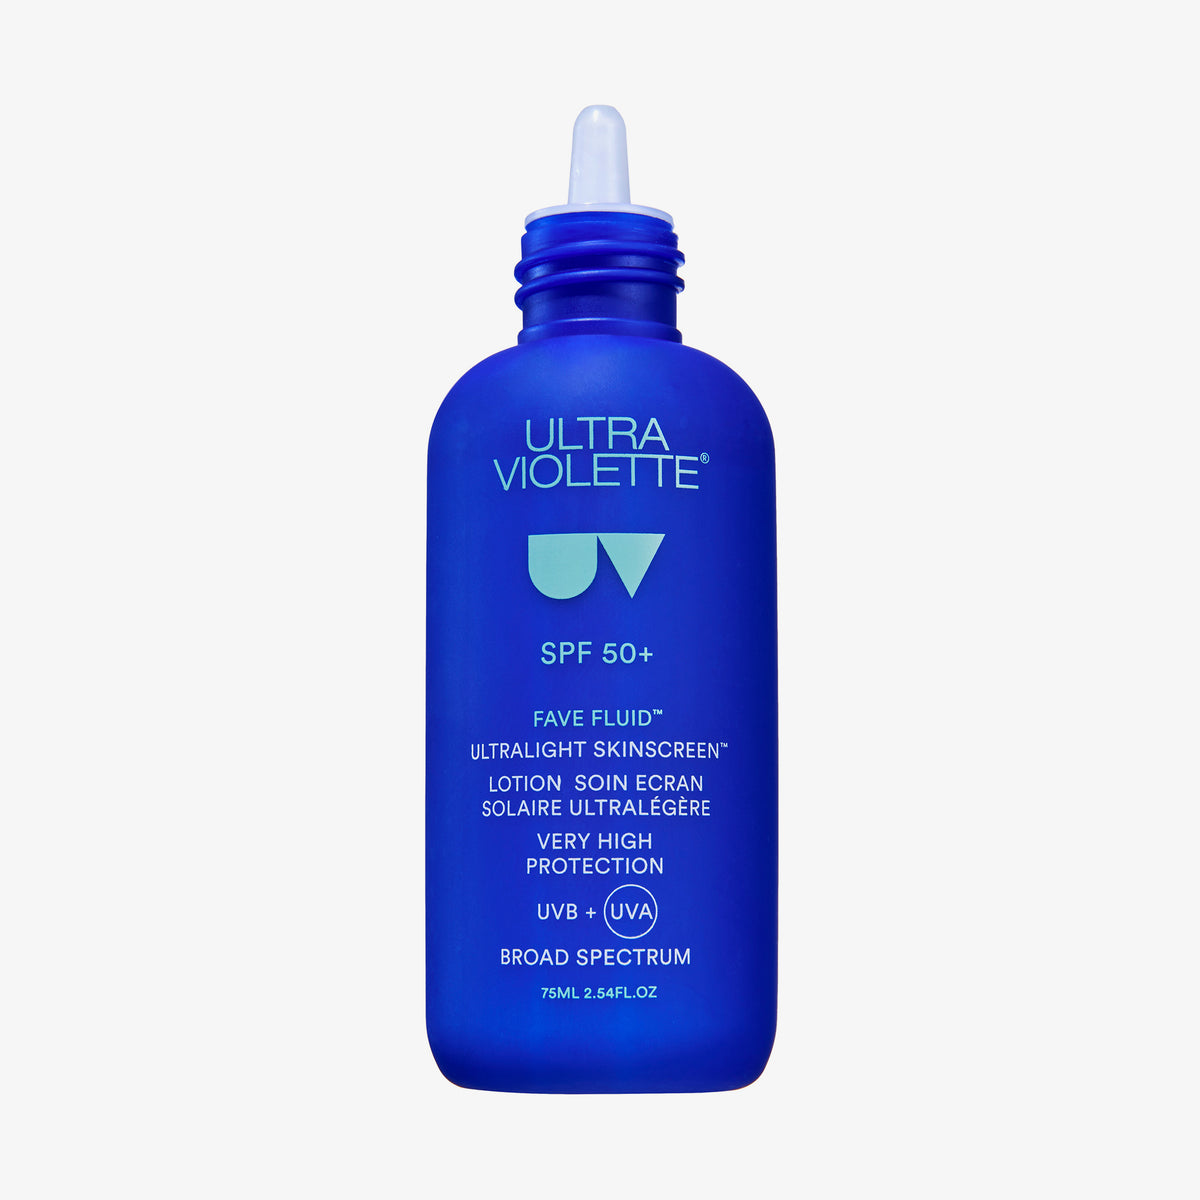 Ultra Violette | Fave Fluid SPF50+ Lightweight Fragrance-Free Skinscreen